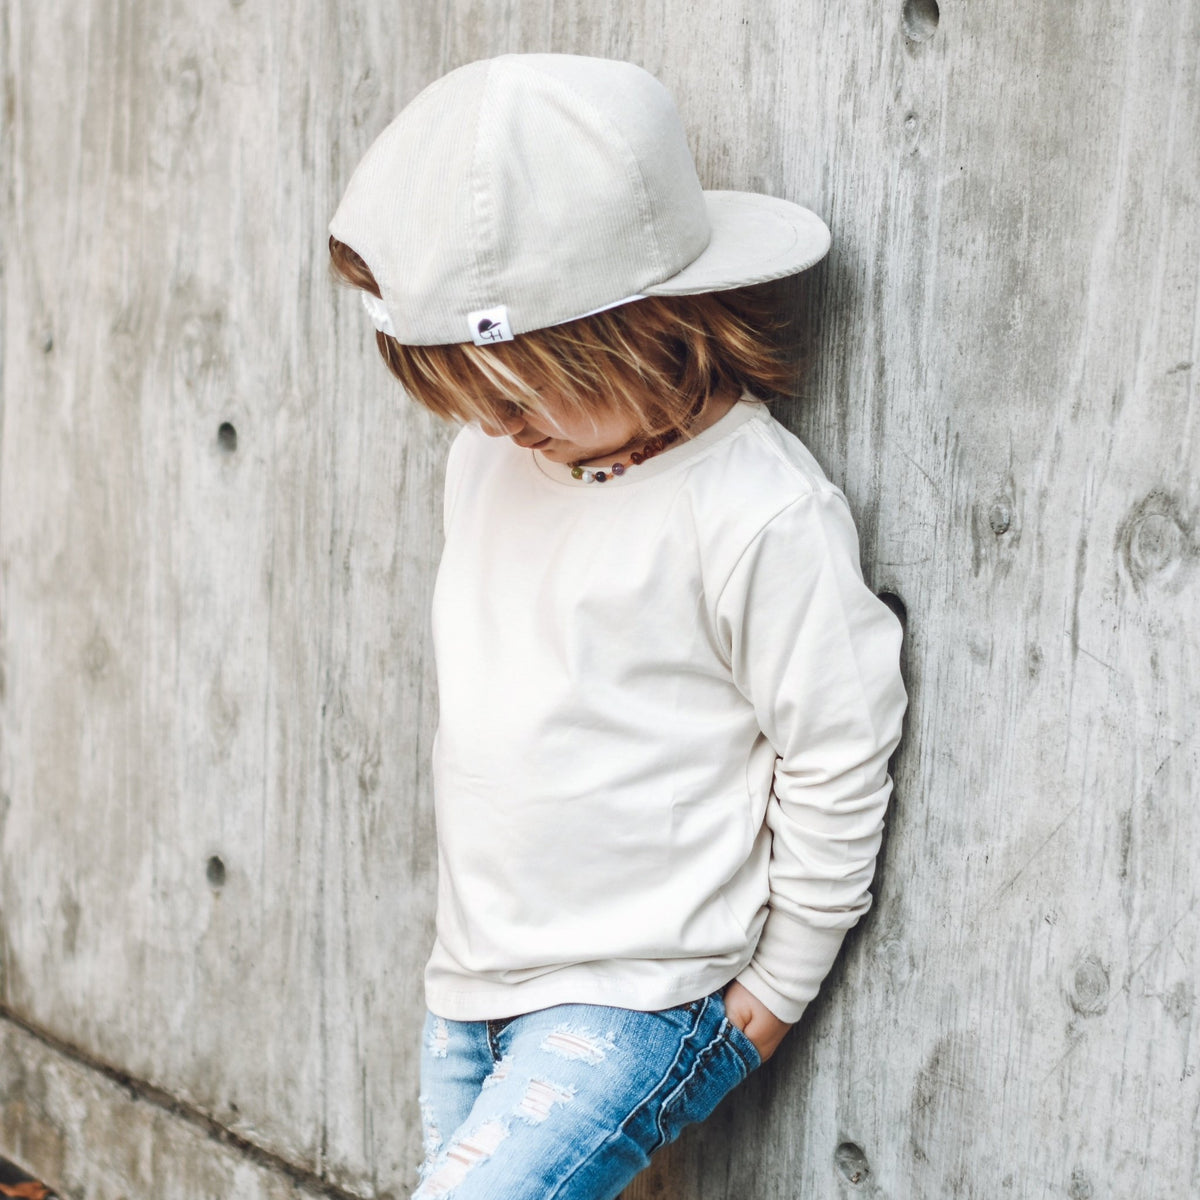 KIDS TRUCKER HAT, Toddler Snapback Hat, Corduroy Youth Adjustable